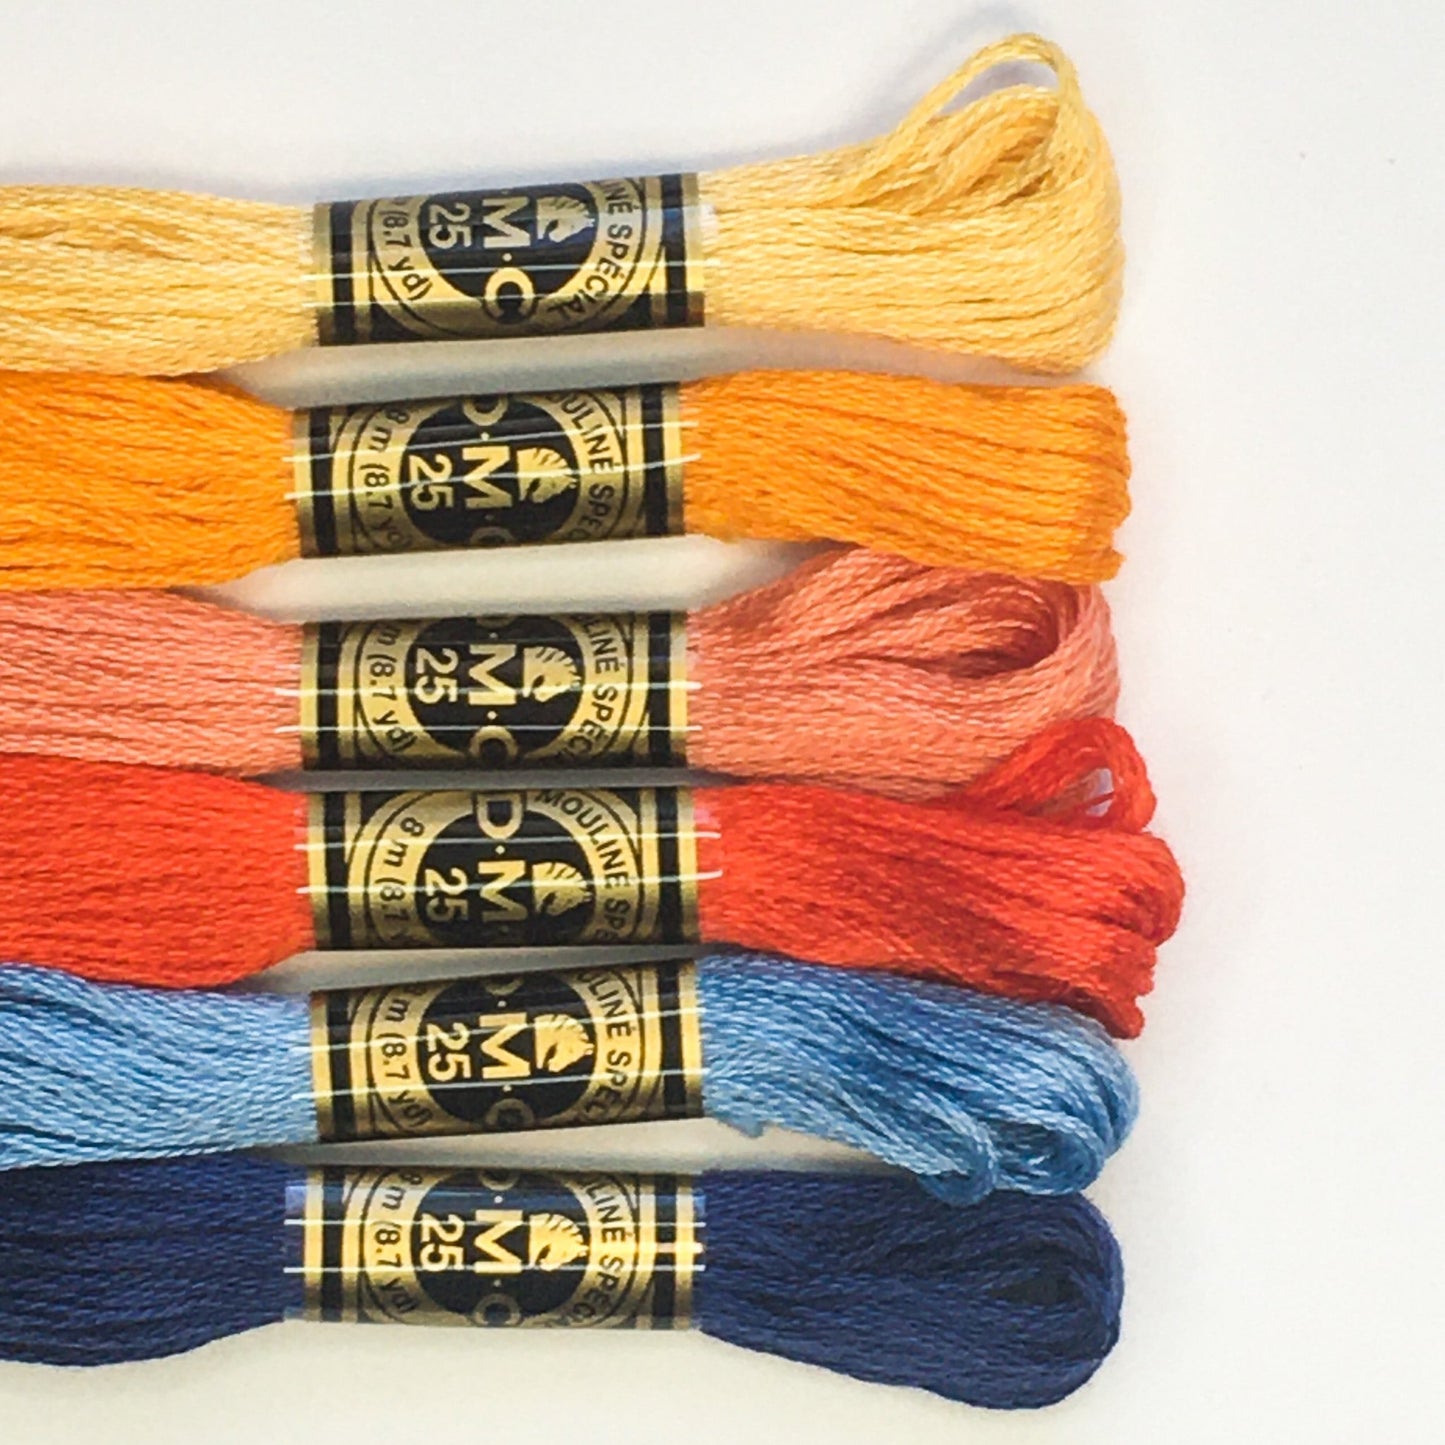 Kingfisher DMC embroidery thread bundle - Craft Make Do